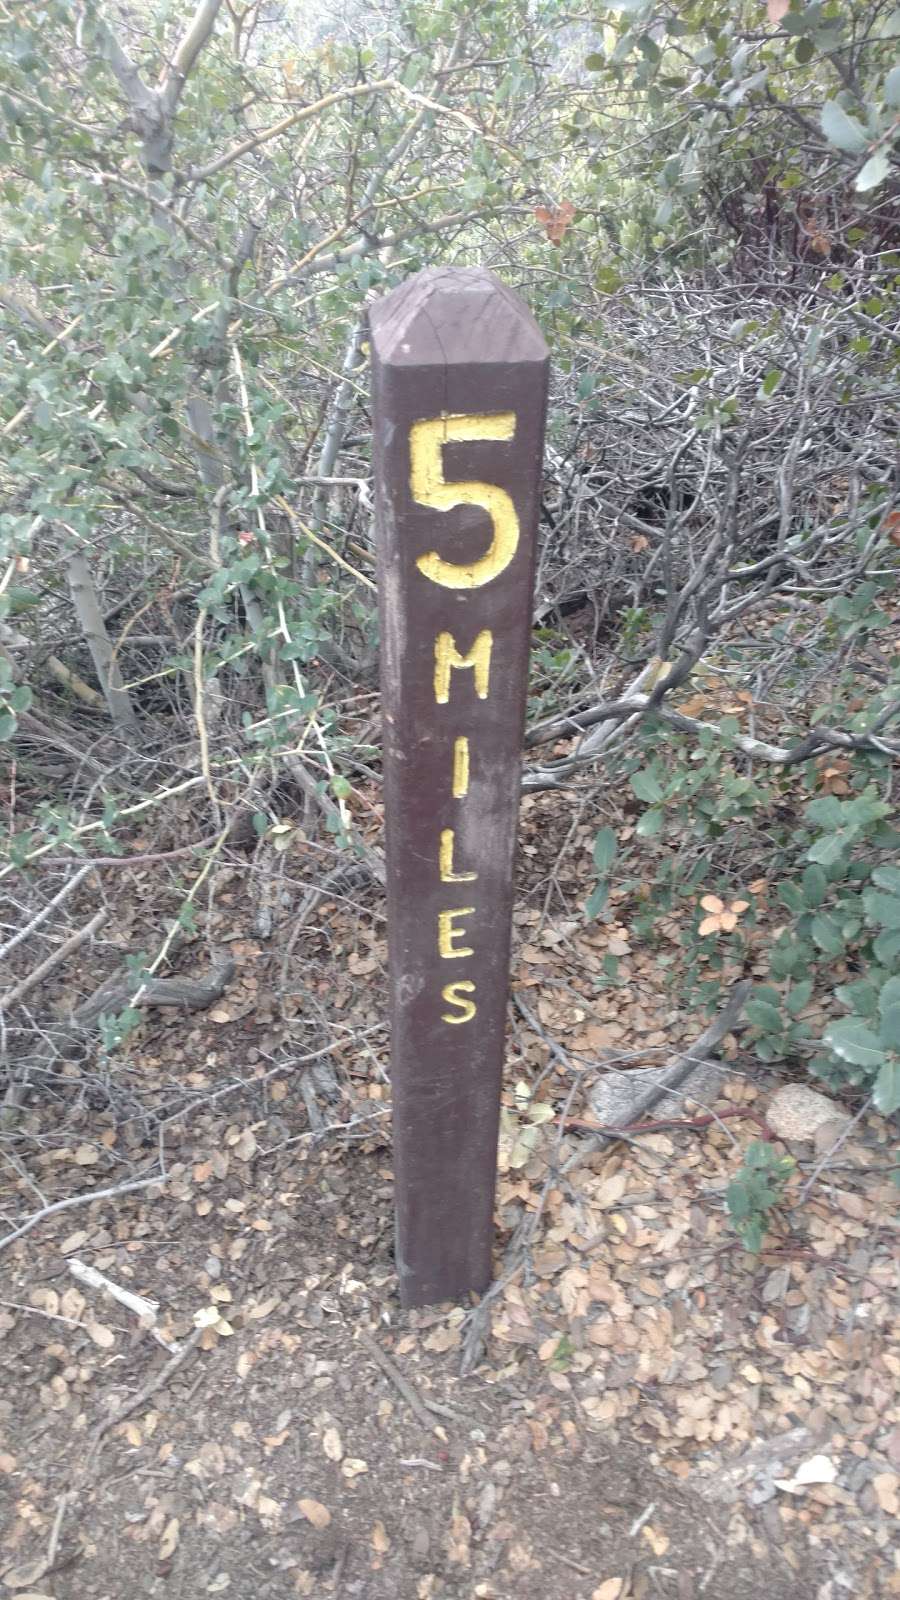 Upper Holy Jim Trail | Main Divide Rd, Corona, CA 92883, USA